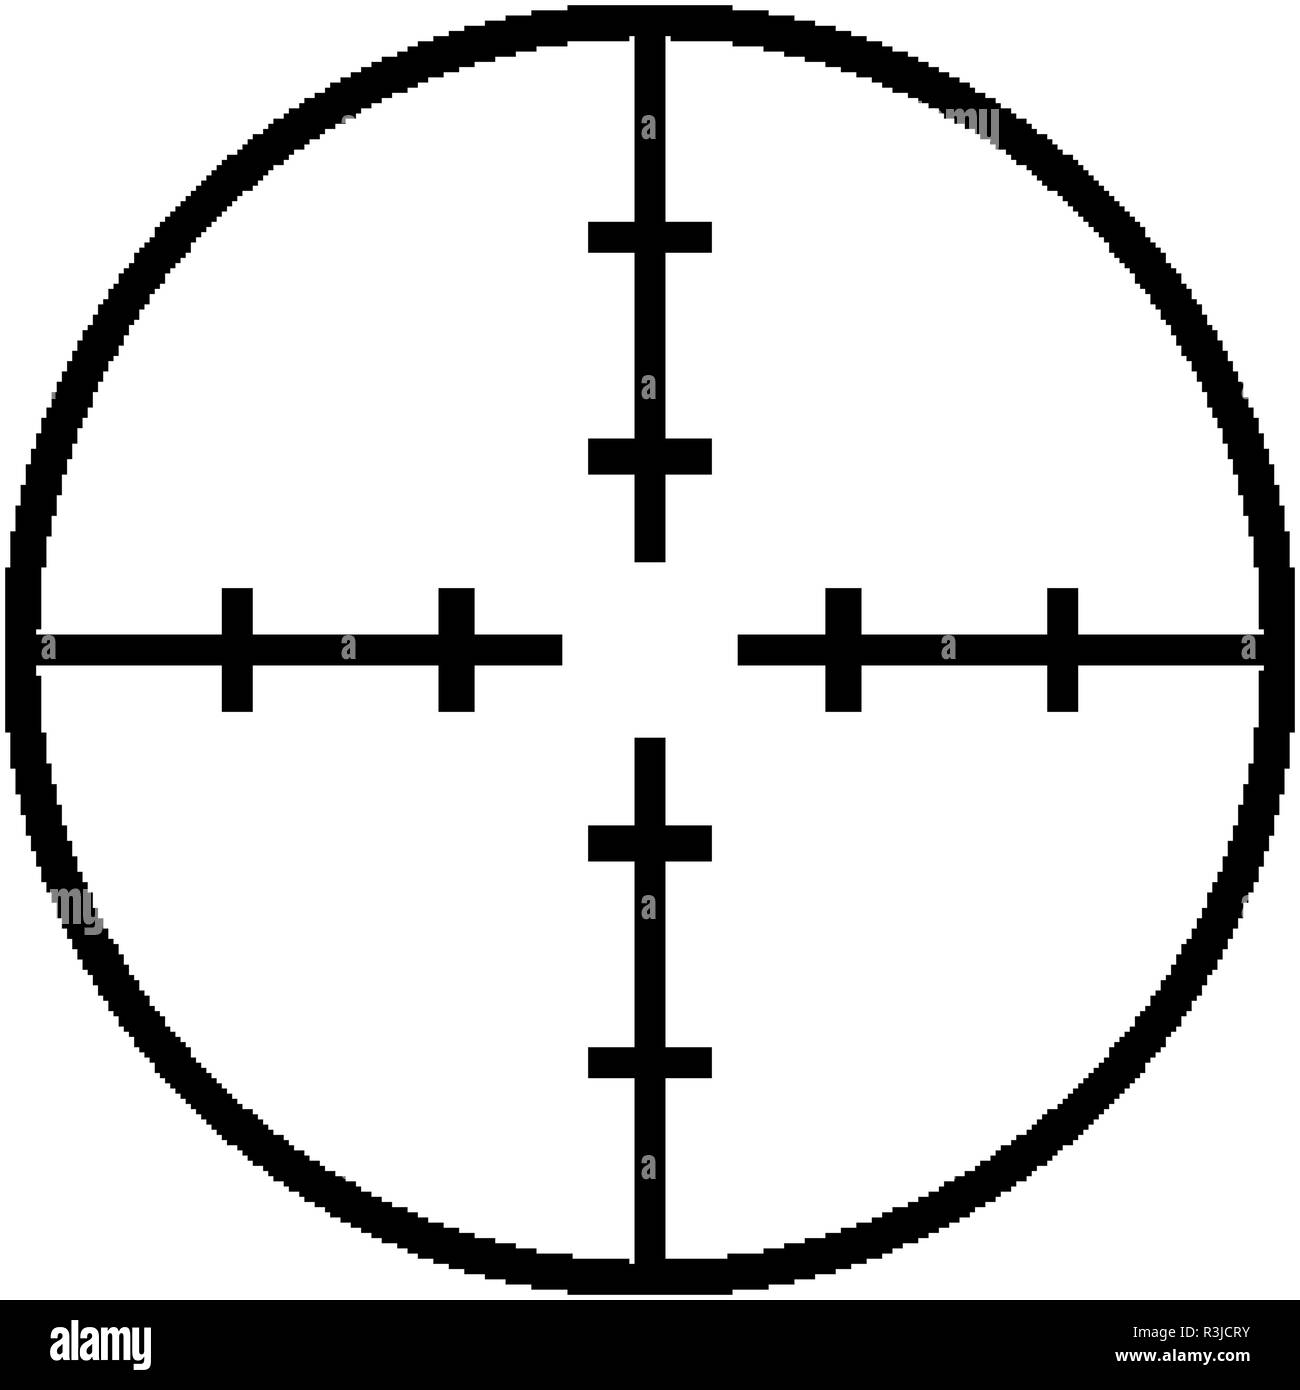 Sniper scope crosshairs thin icon set. Isolated rifle gun target Stock Vector